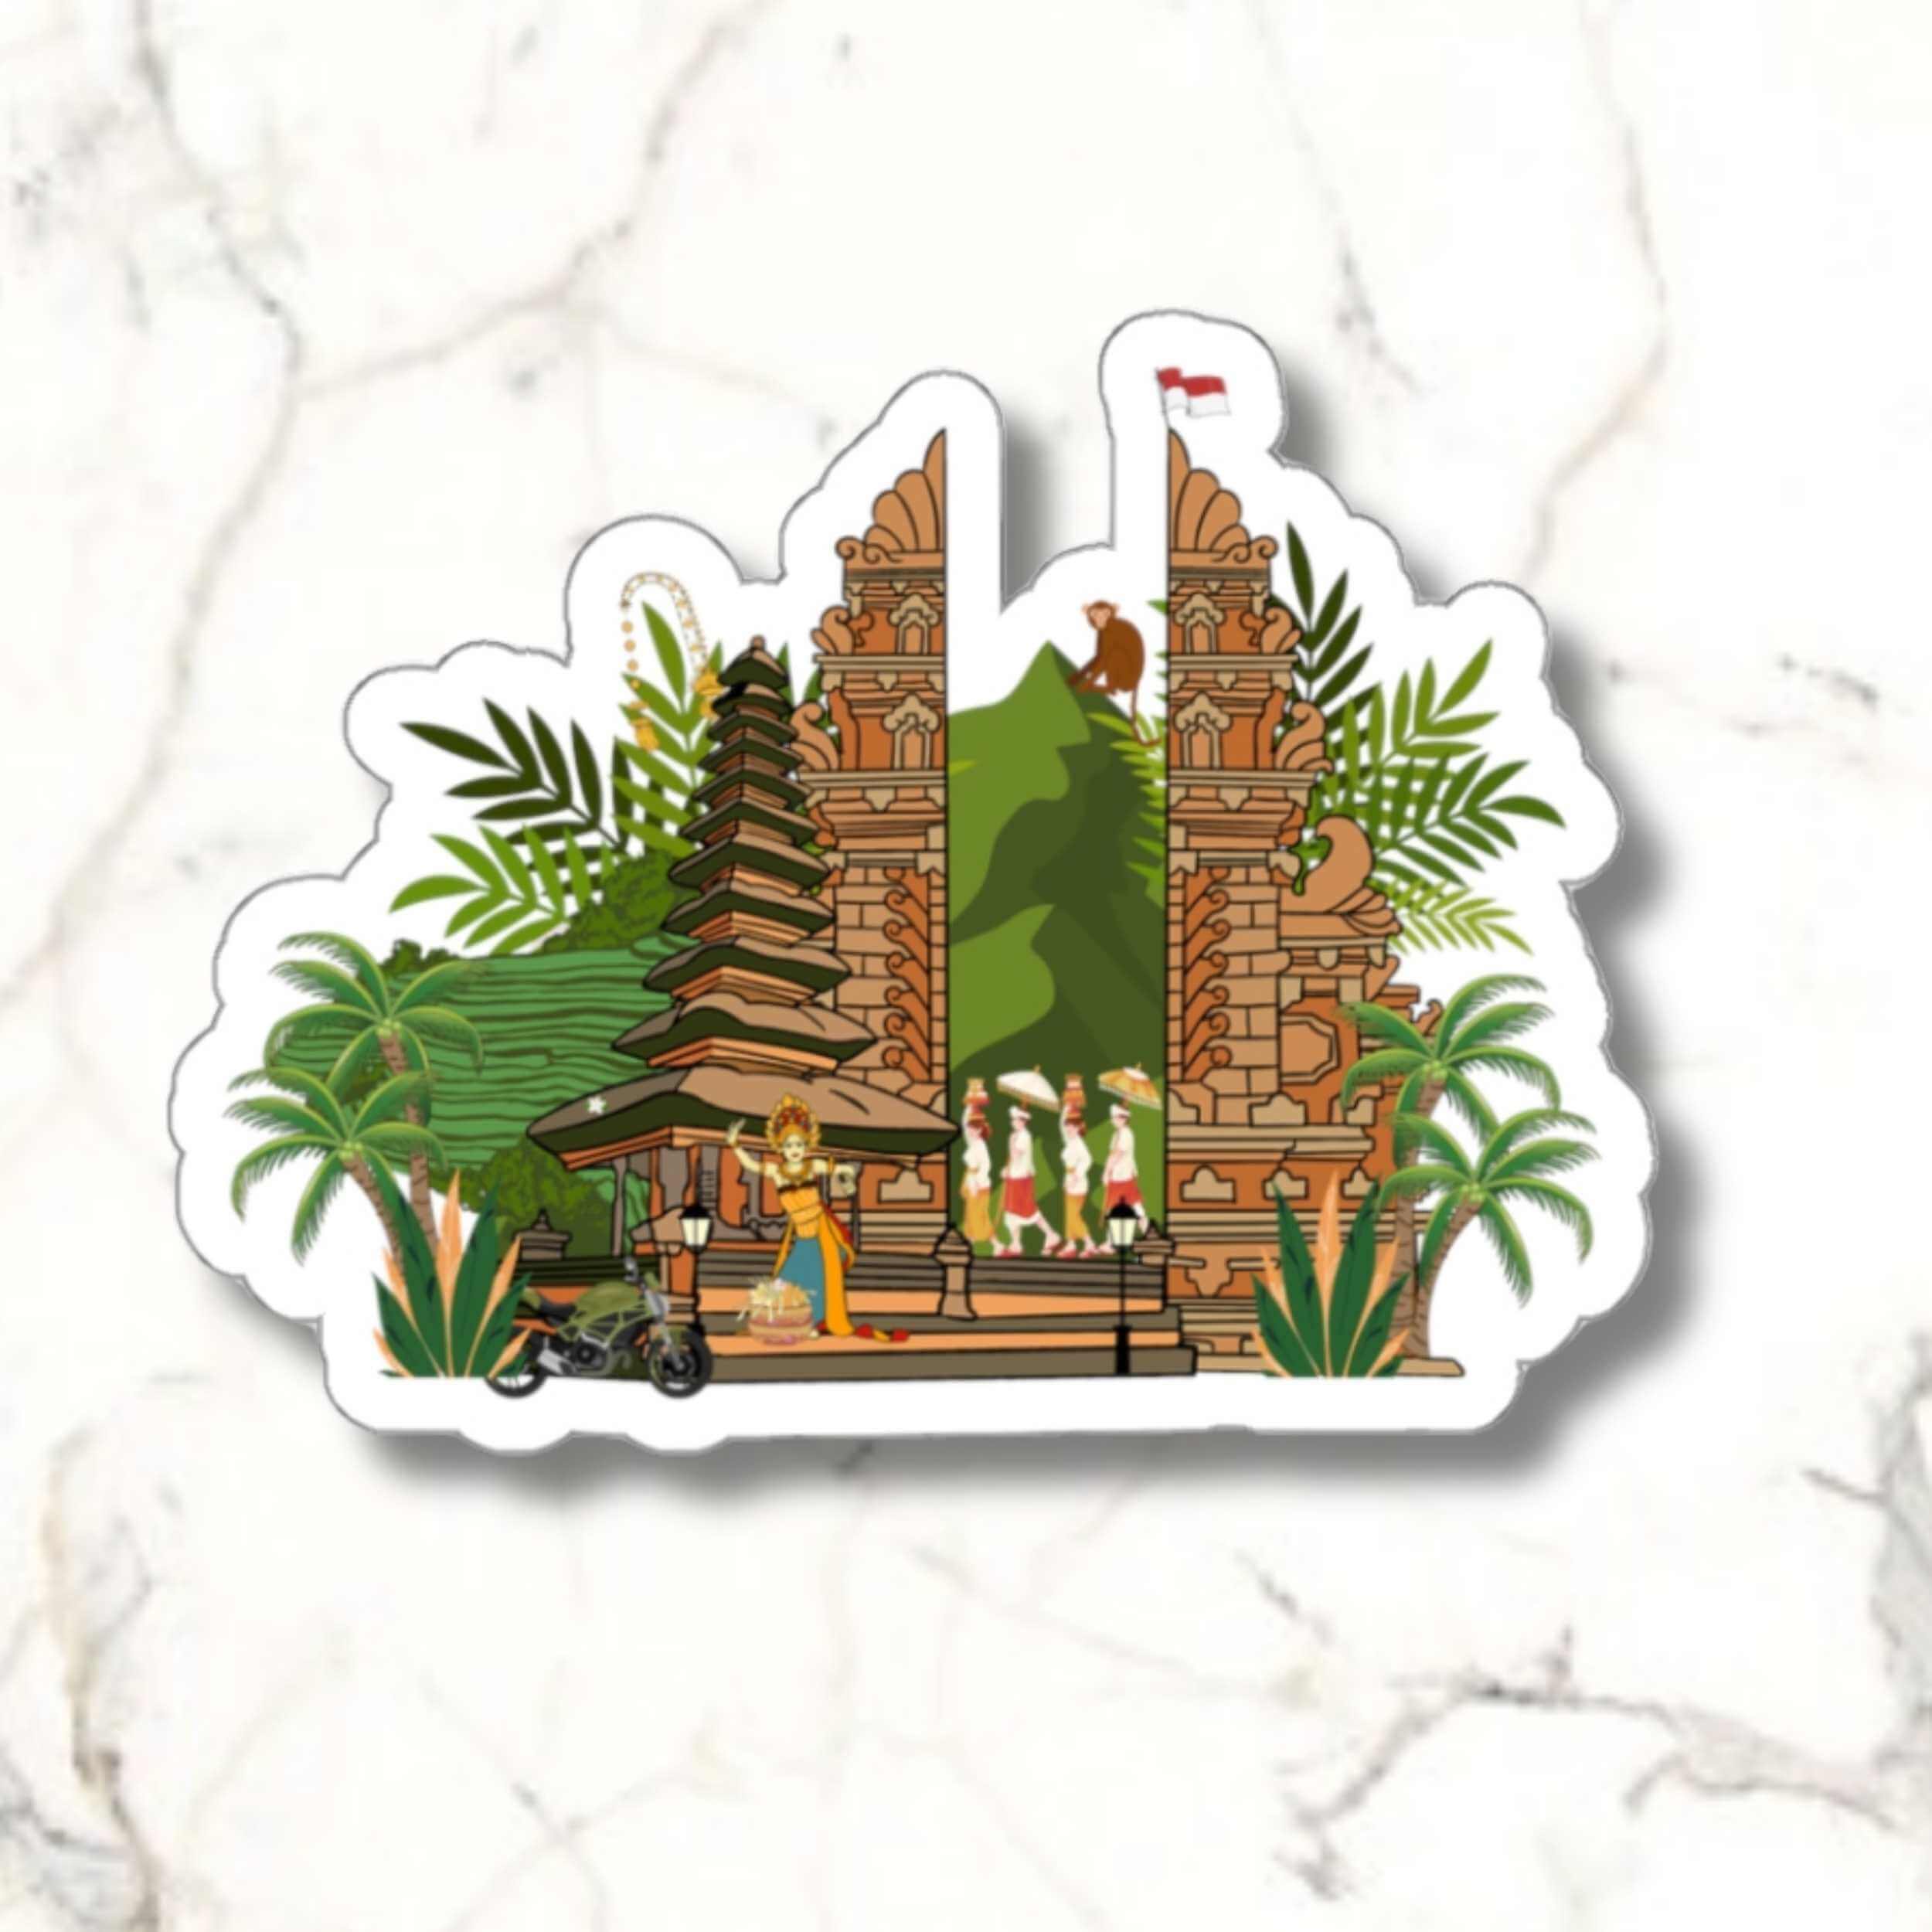 Bali Sticker